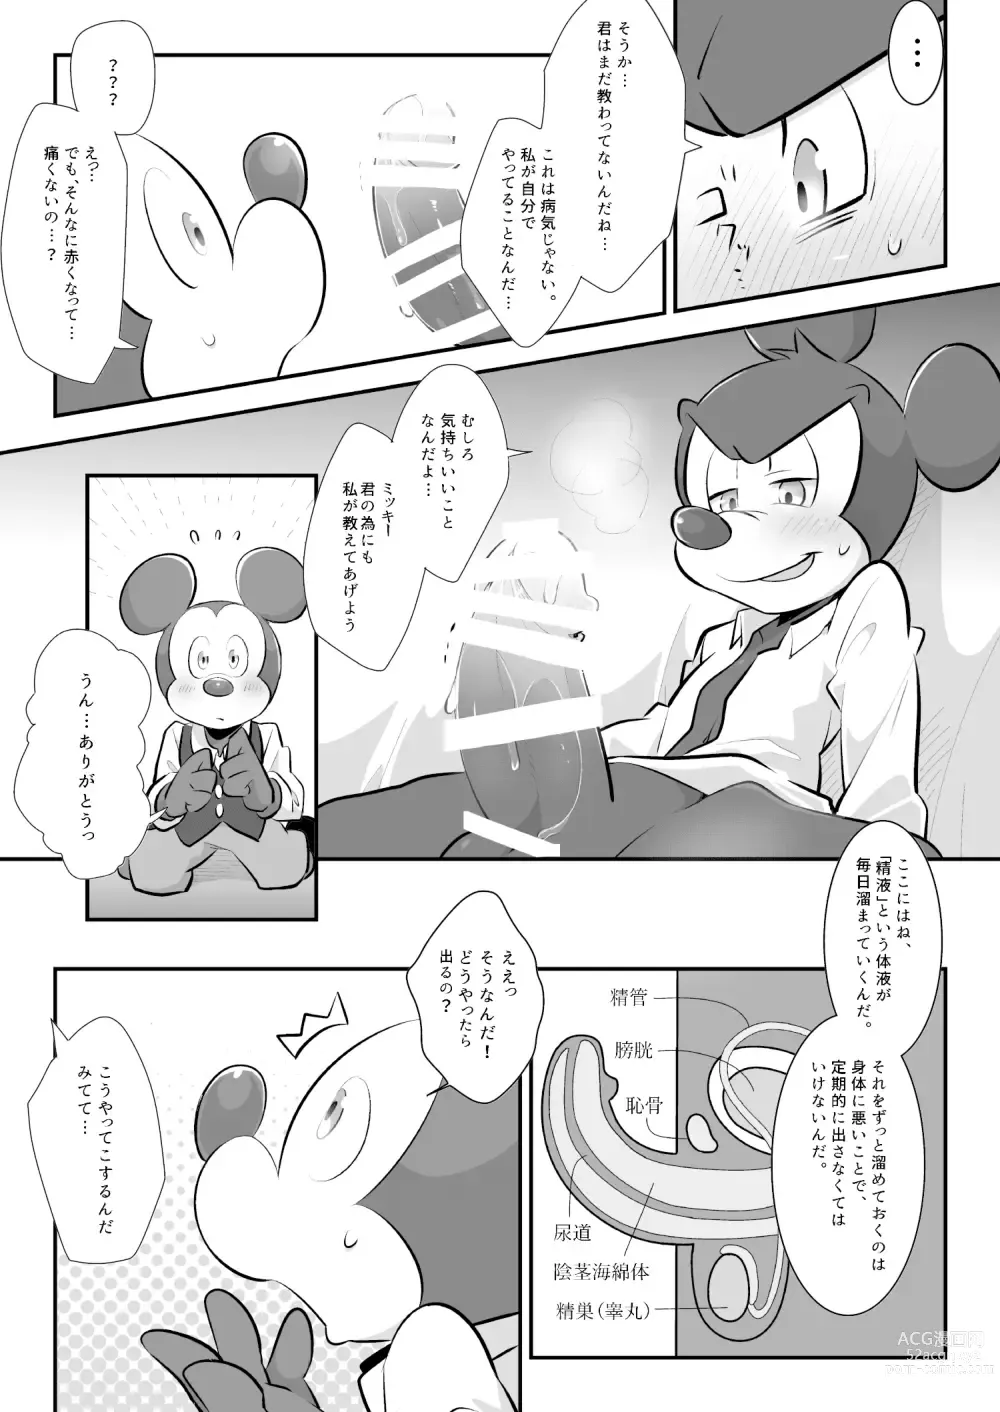 Page 6 of doujinshi Kimi ga  Oshiete Kureta Koto - The things you told me